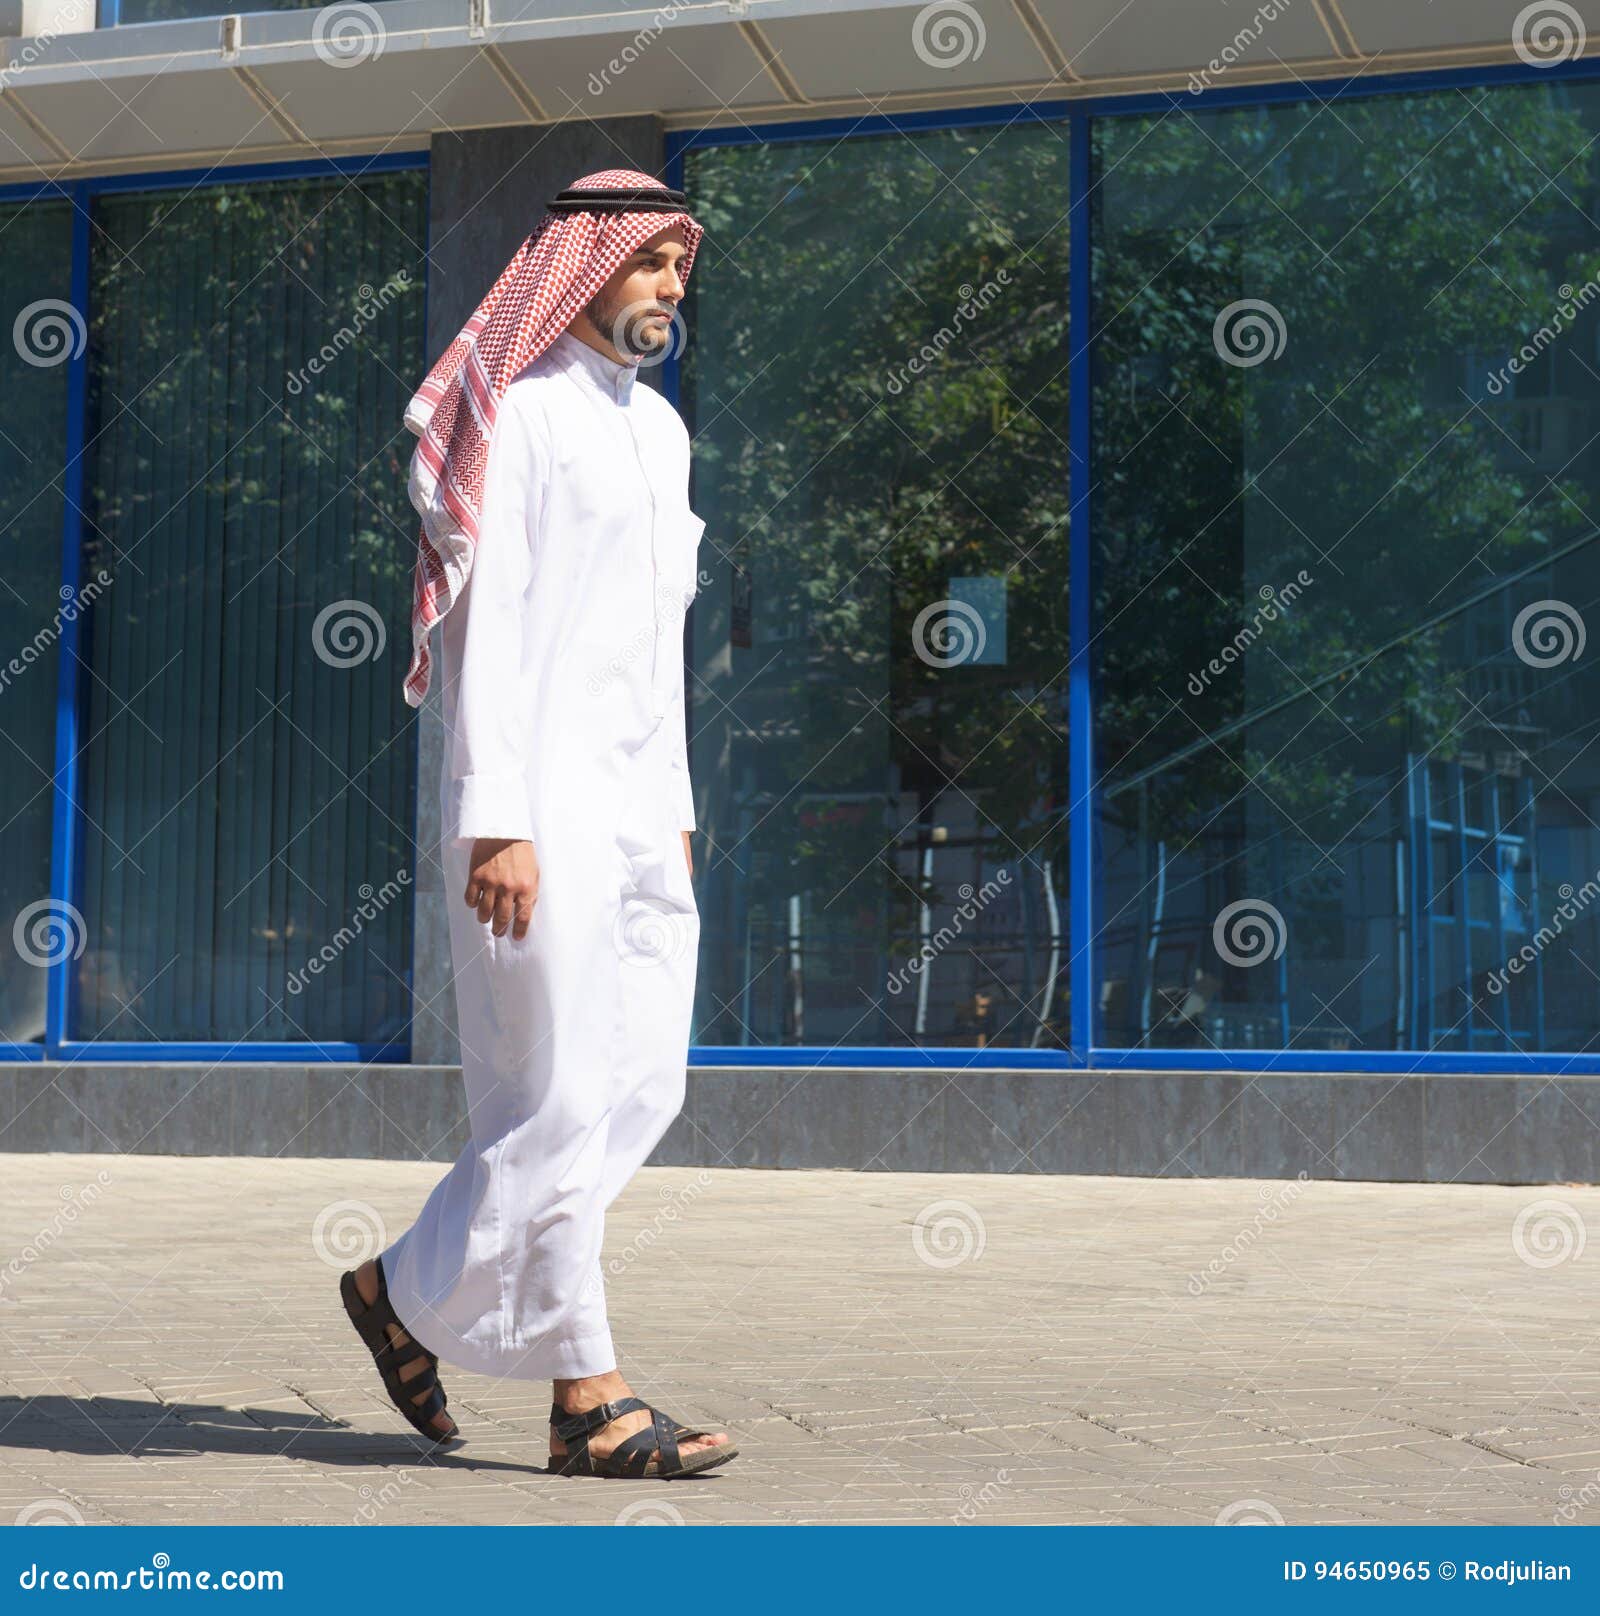 Arabian Man Walking Along the Street Stock Image - Image of arabic ...